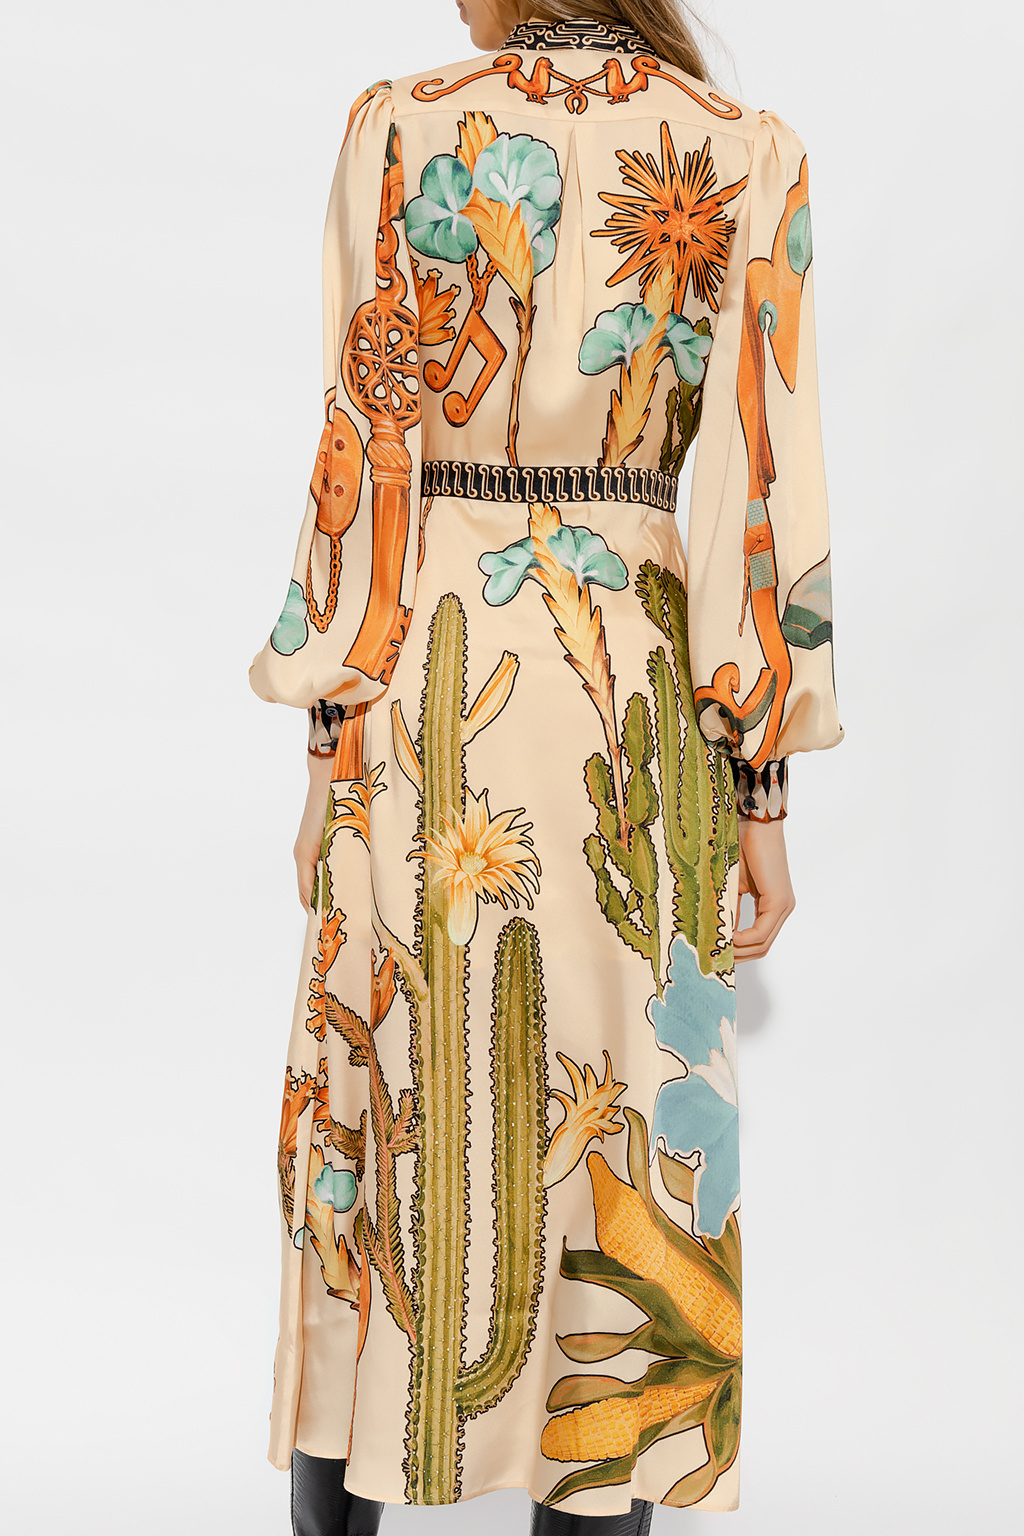 Temperley London ‘Palomino’ patterned dress